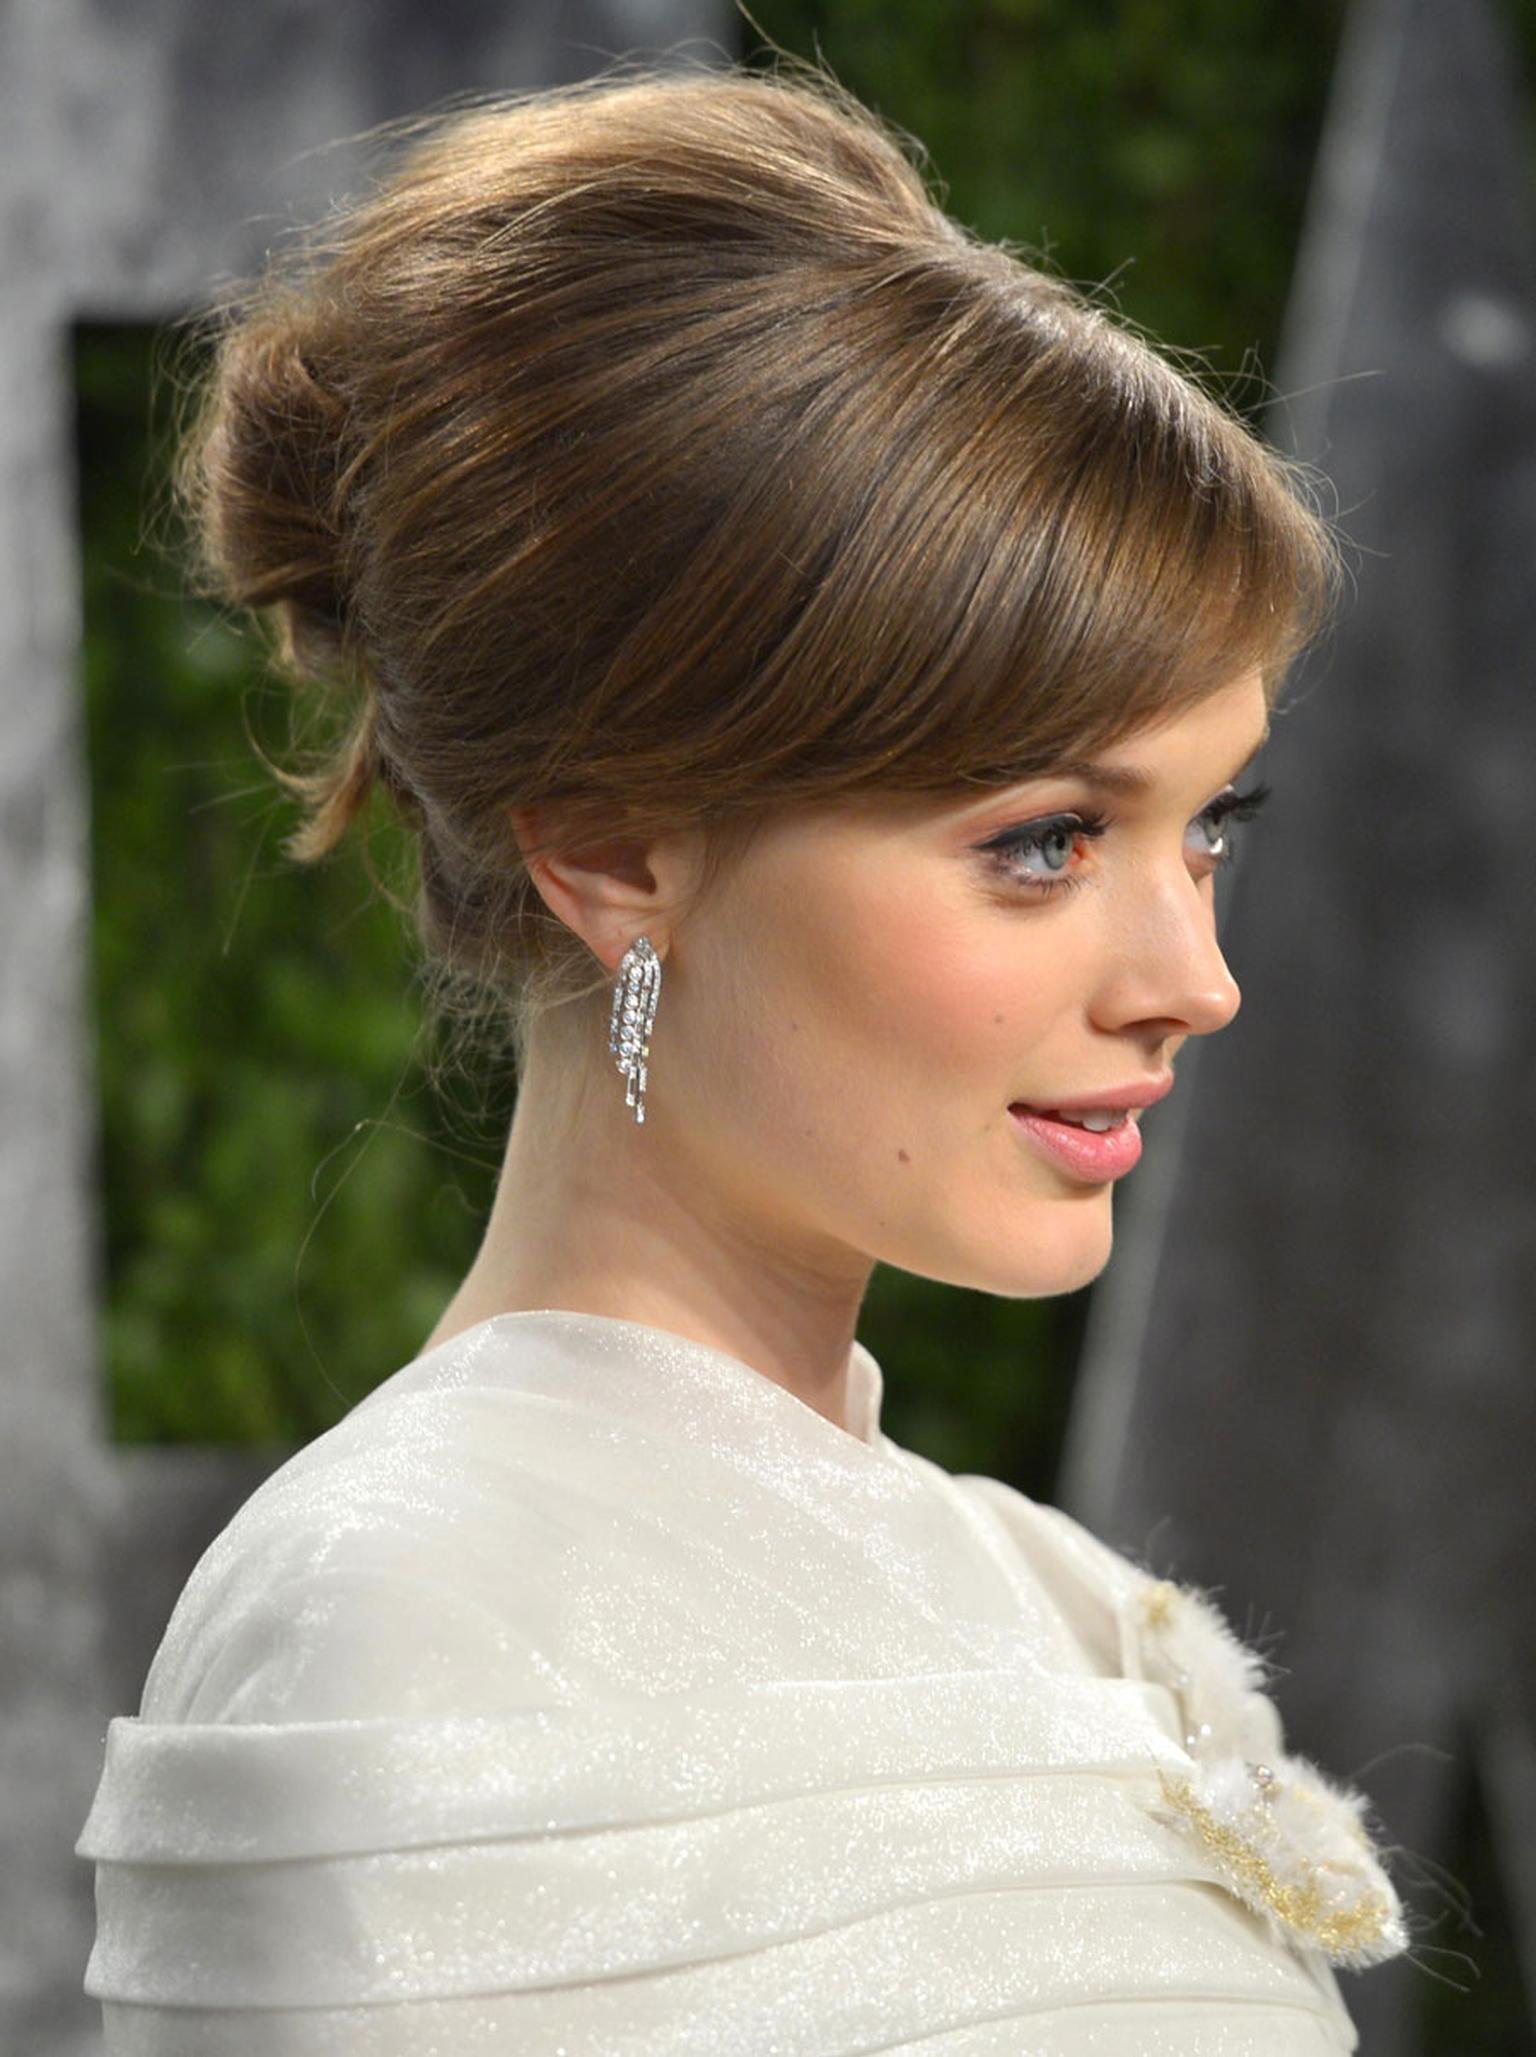 Chanel-Bella-Heathcote---Oscars-2013.jpg